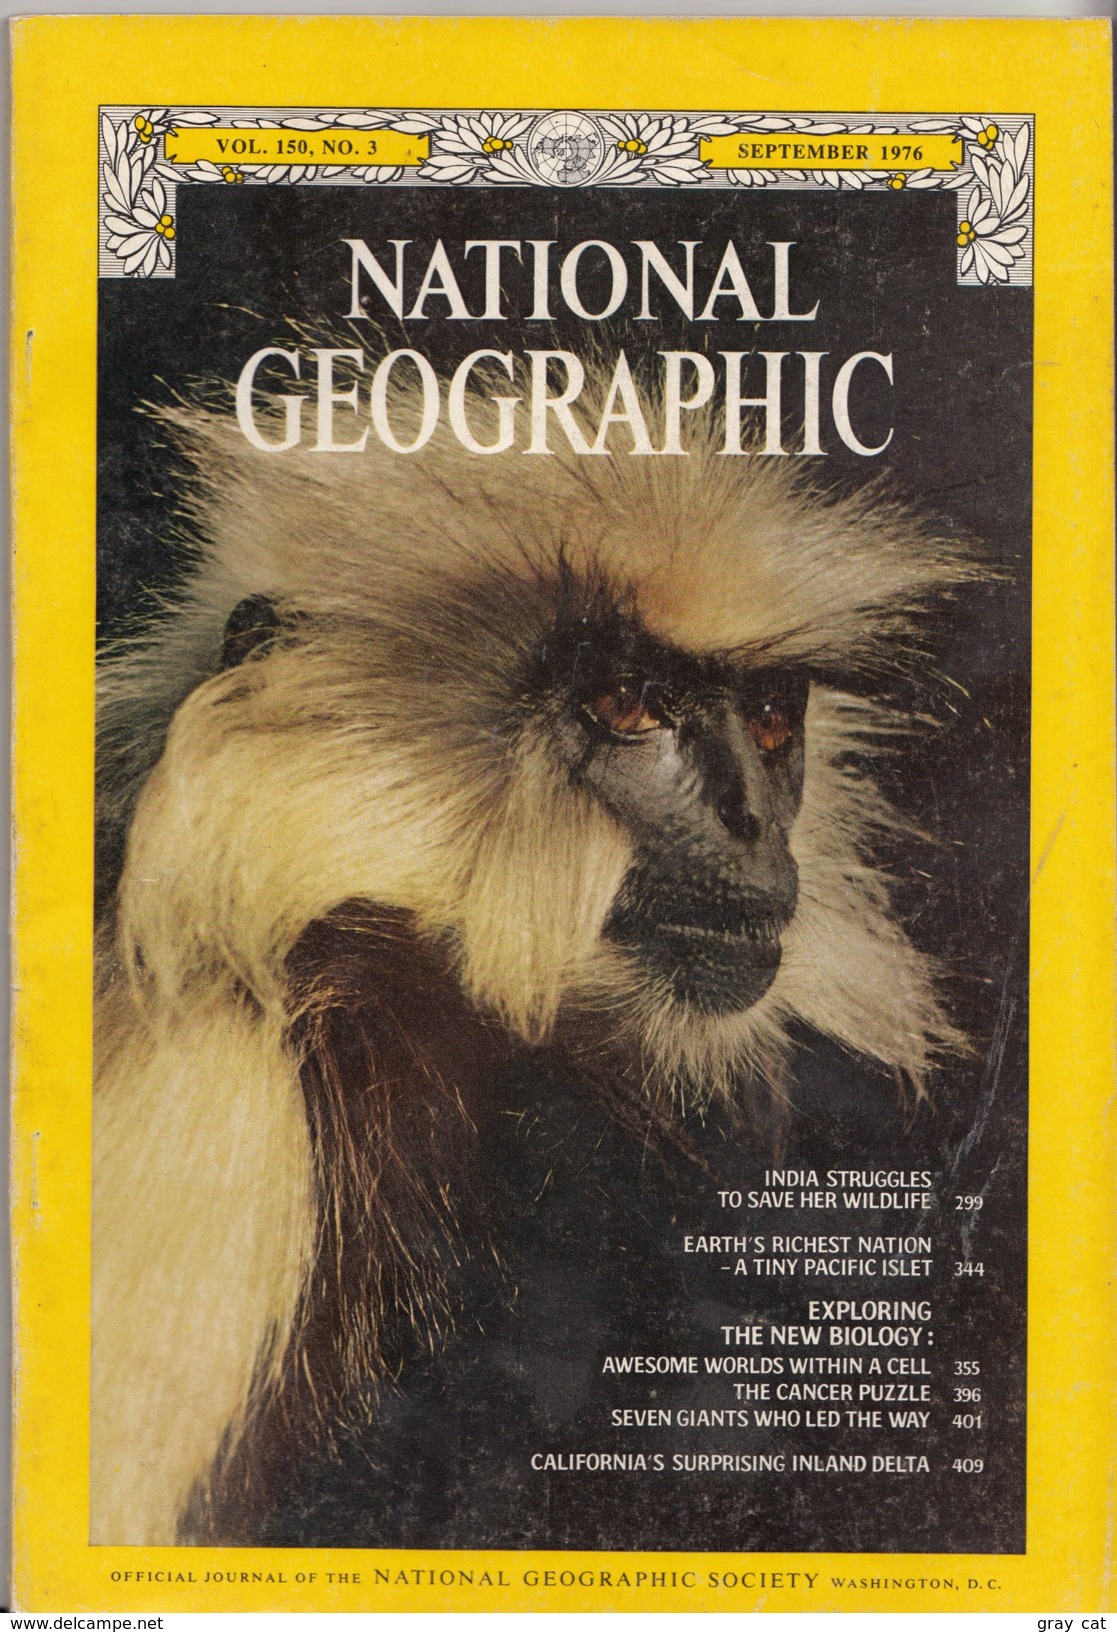 National Geographic Magazine Vol. 150, No. 3, September 1976 - Reisen